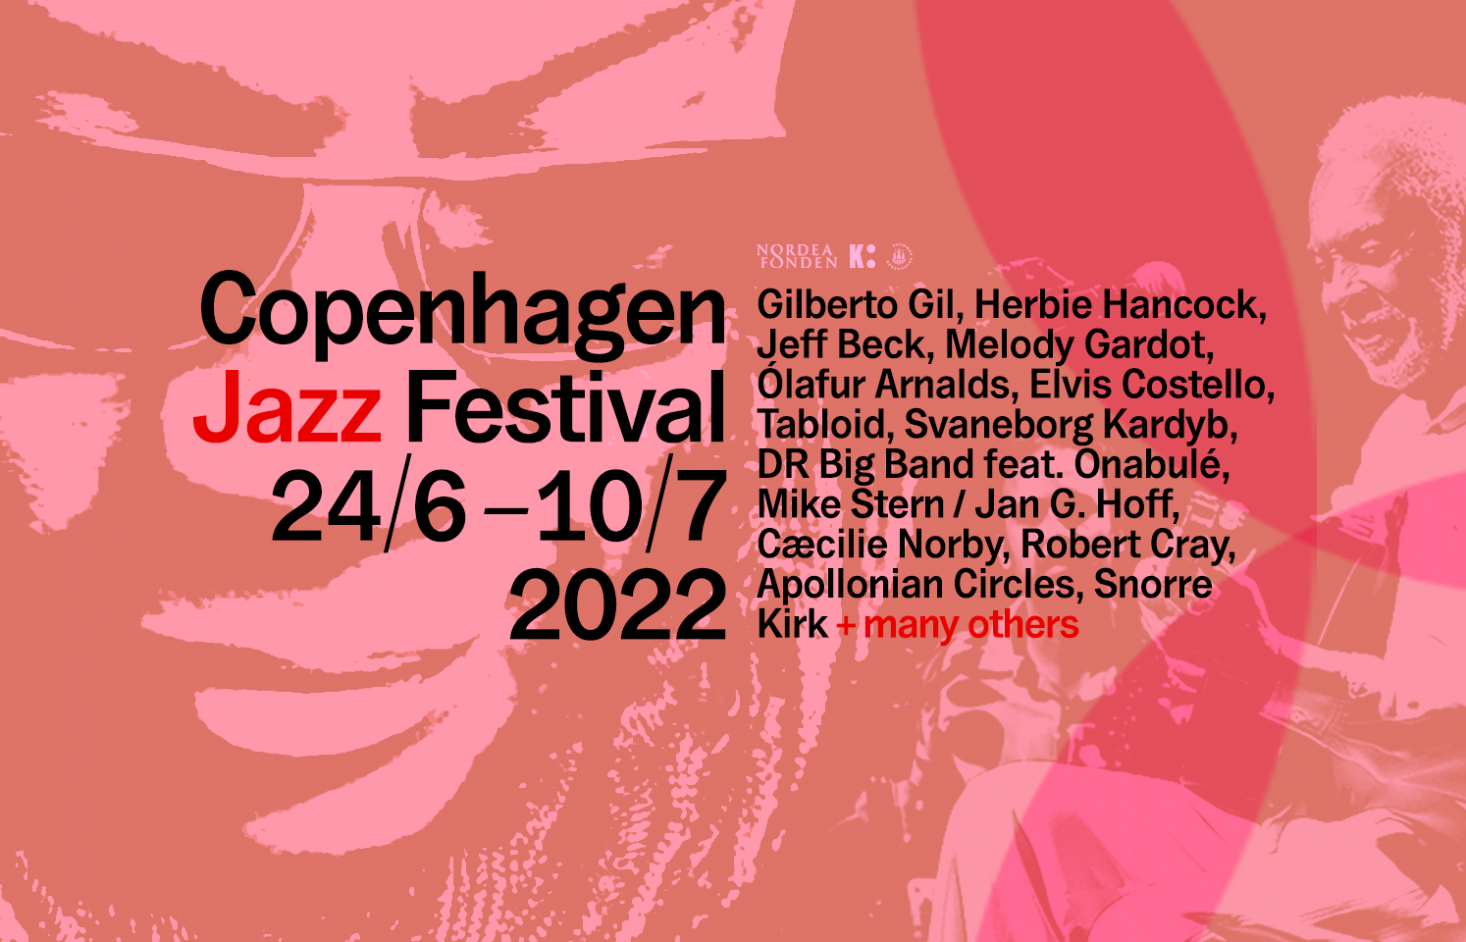 Check out the international headliners at Copenhagen Jazz Festival 2022